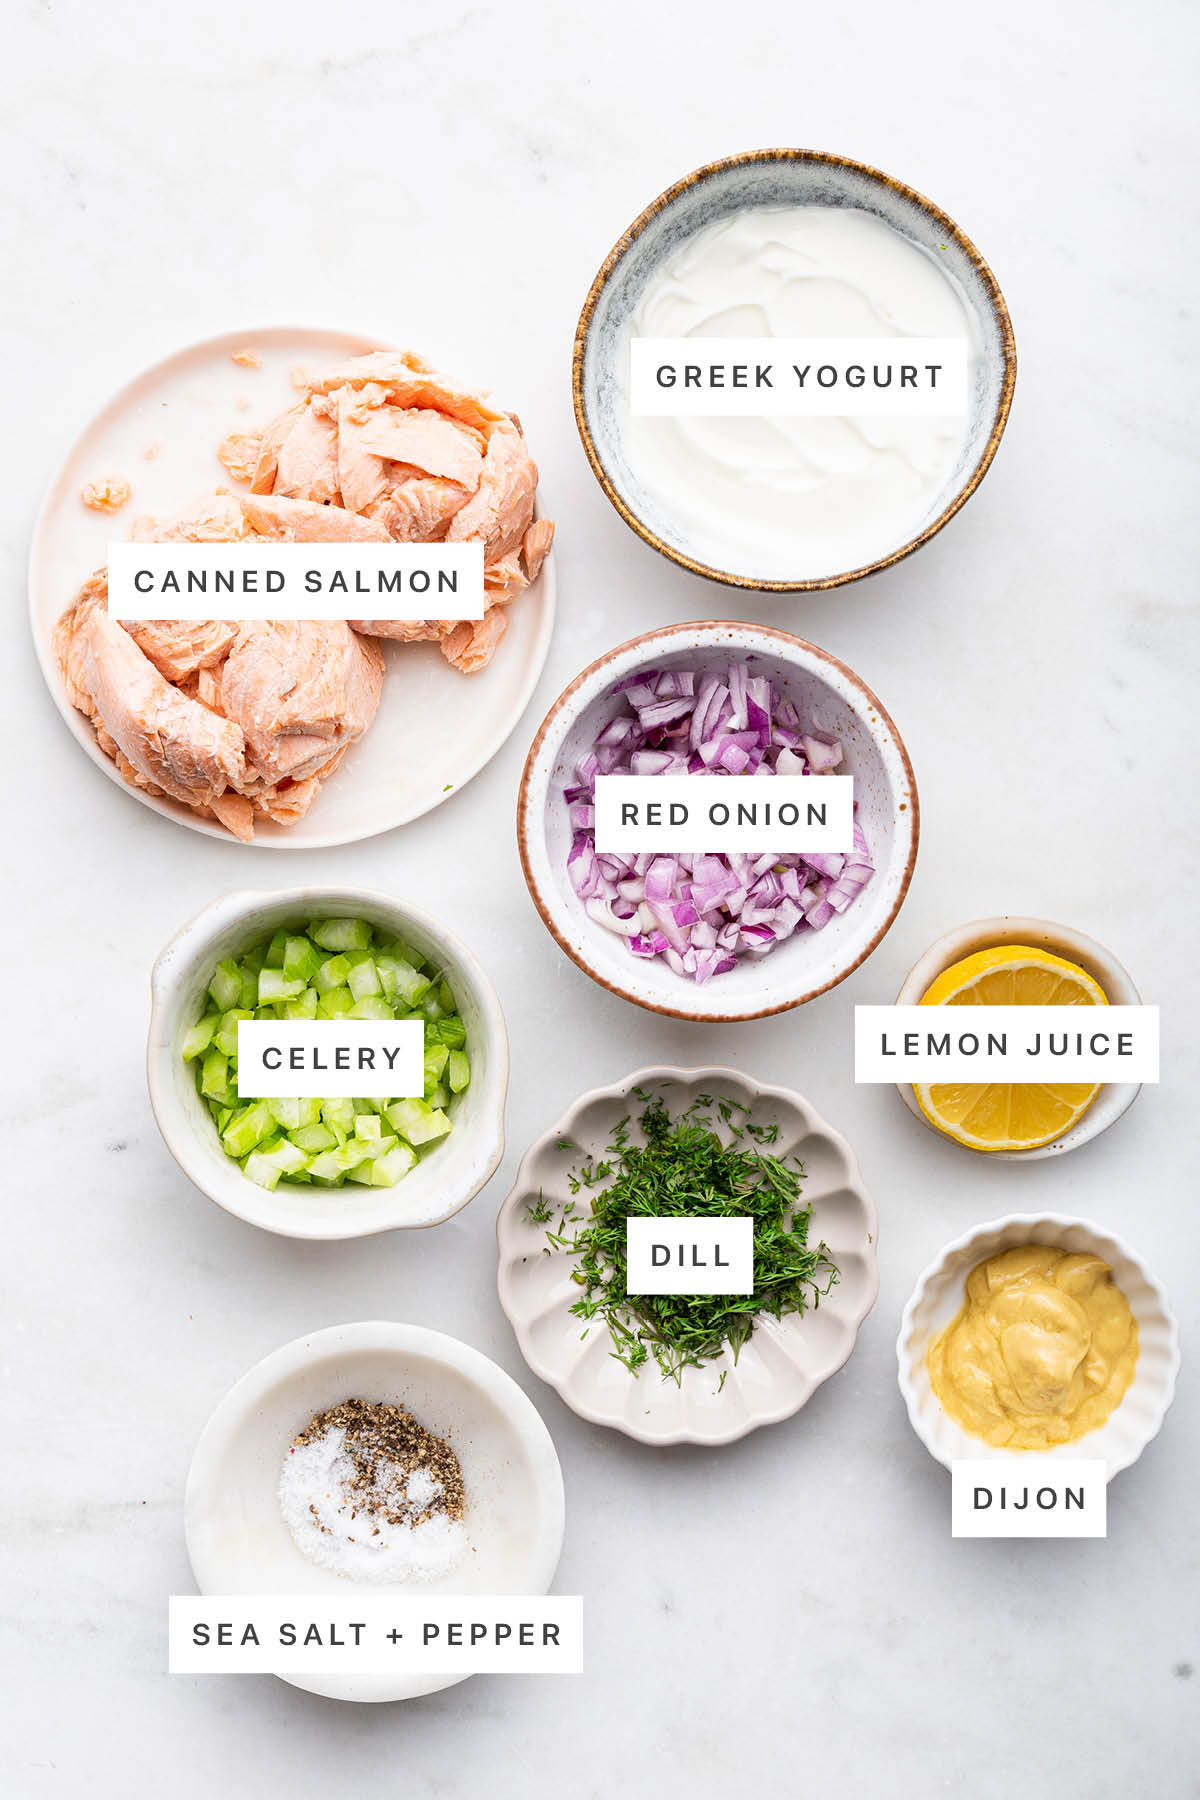 Ingredients measured out to make Salmon Salad: canned salmon, Greek yogurt, red onion, celery, dill, lemon juice, dijon, salt and pepper.